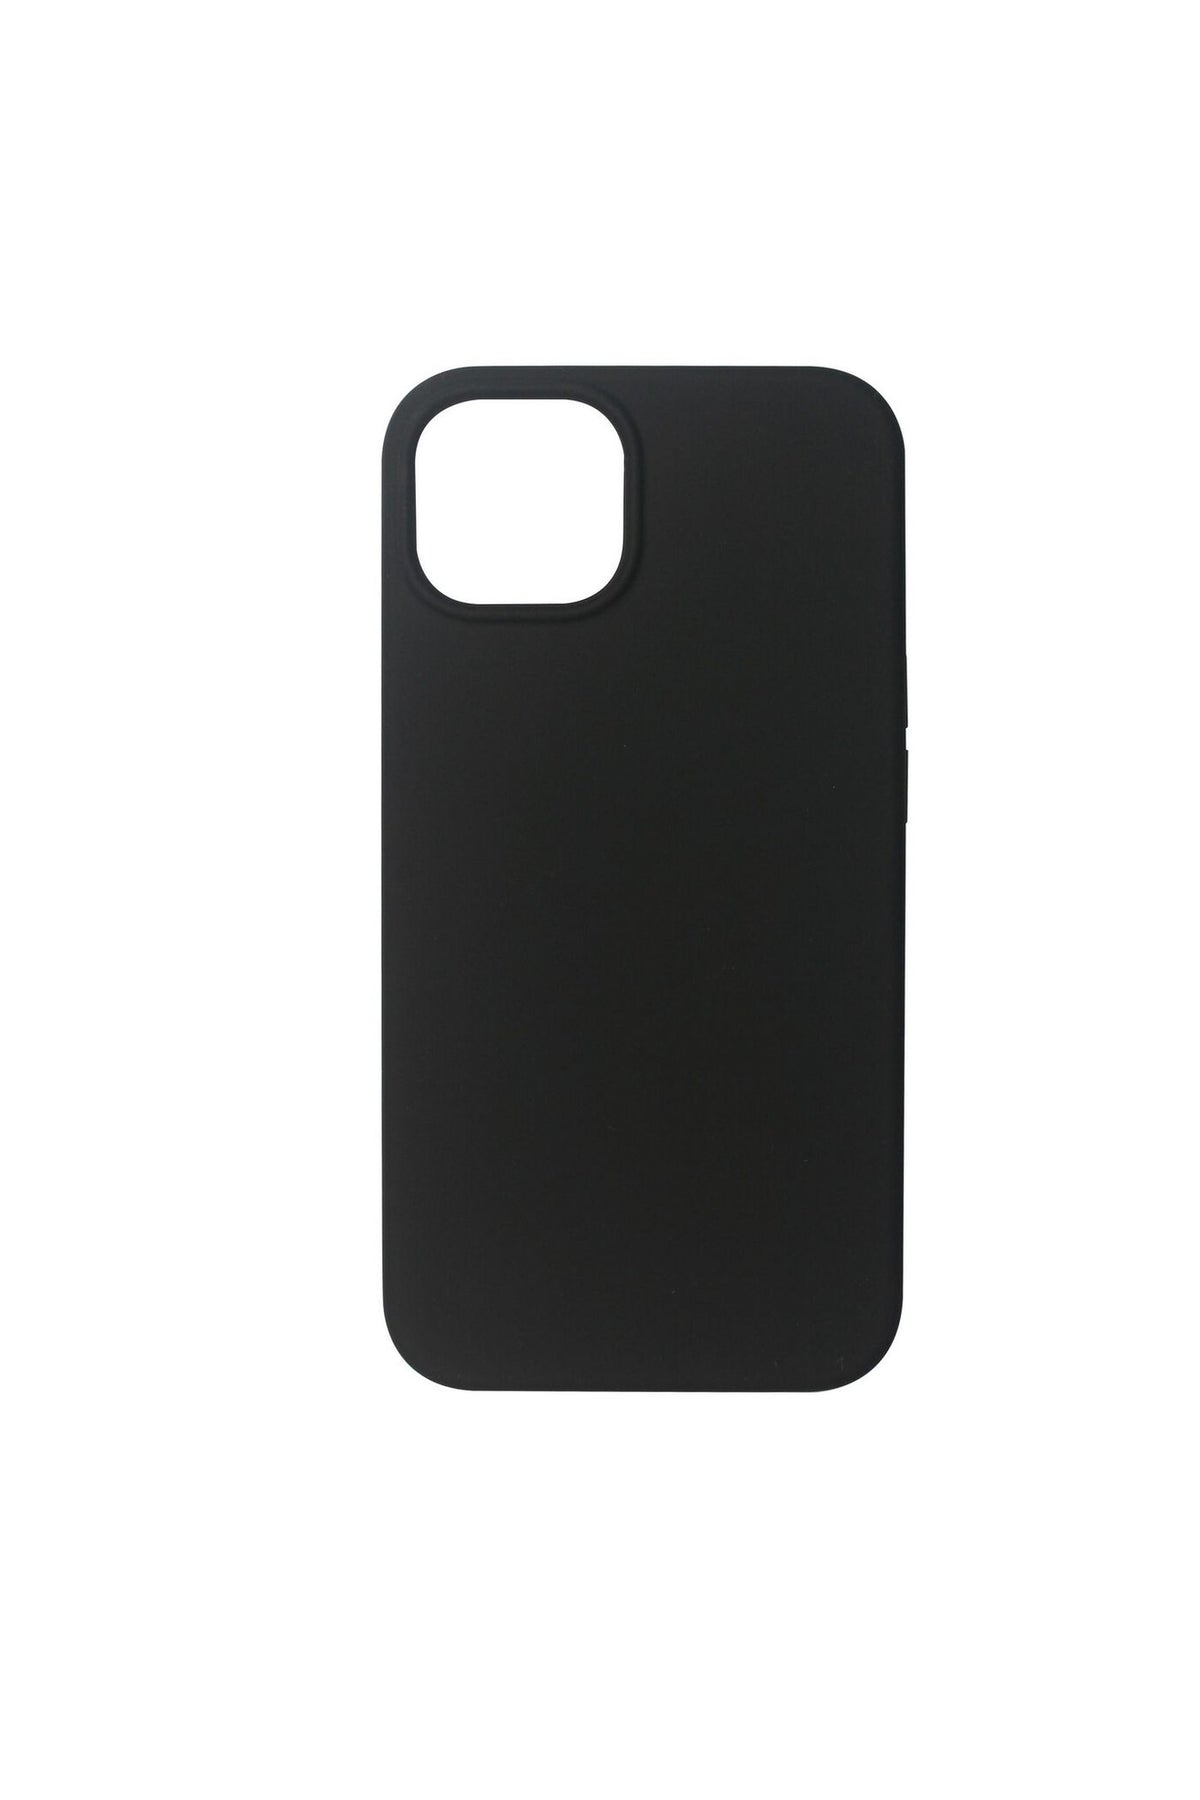 eSTUFF DUBLIN Magnetic mobile phone case for iPhone 13 in Black